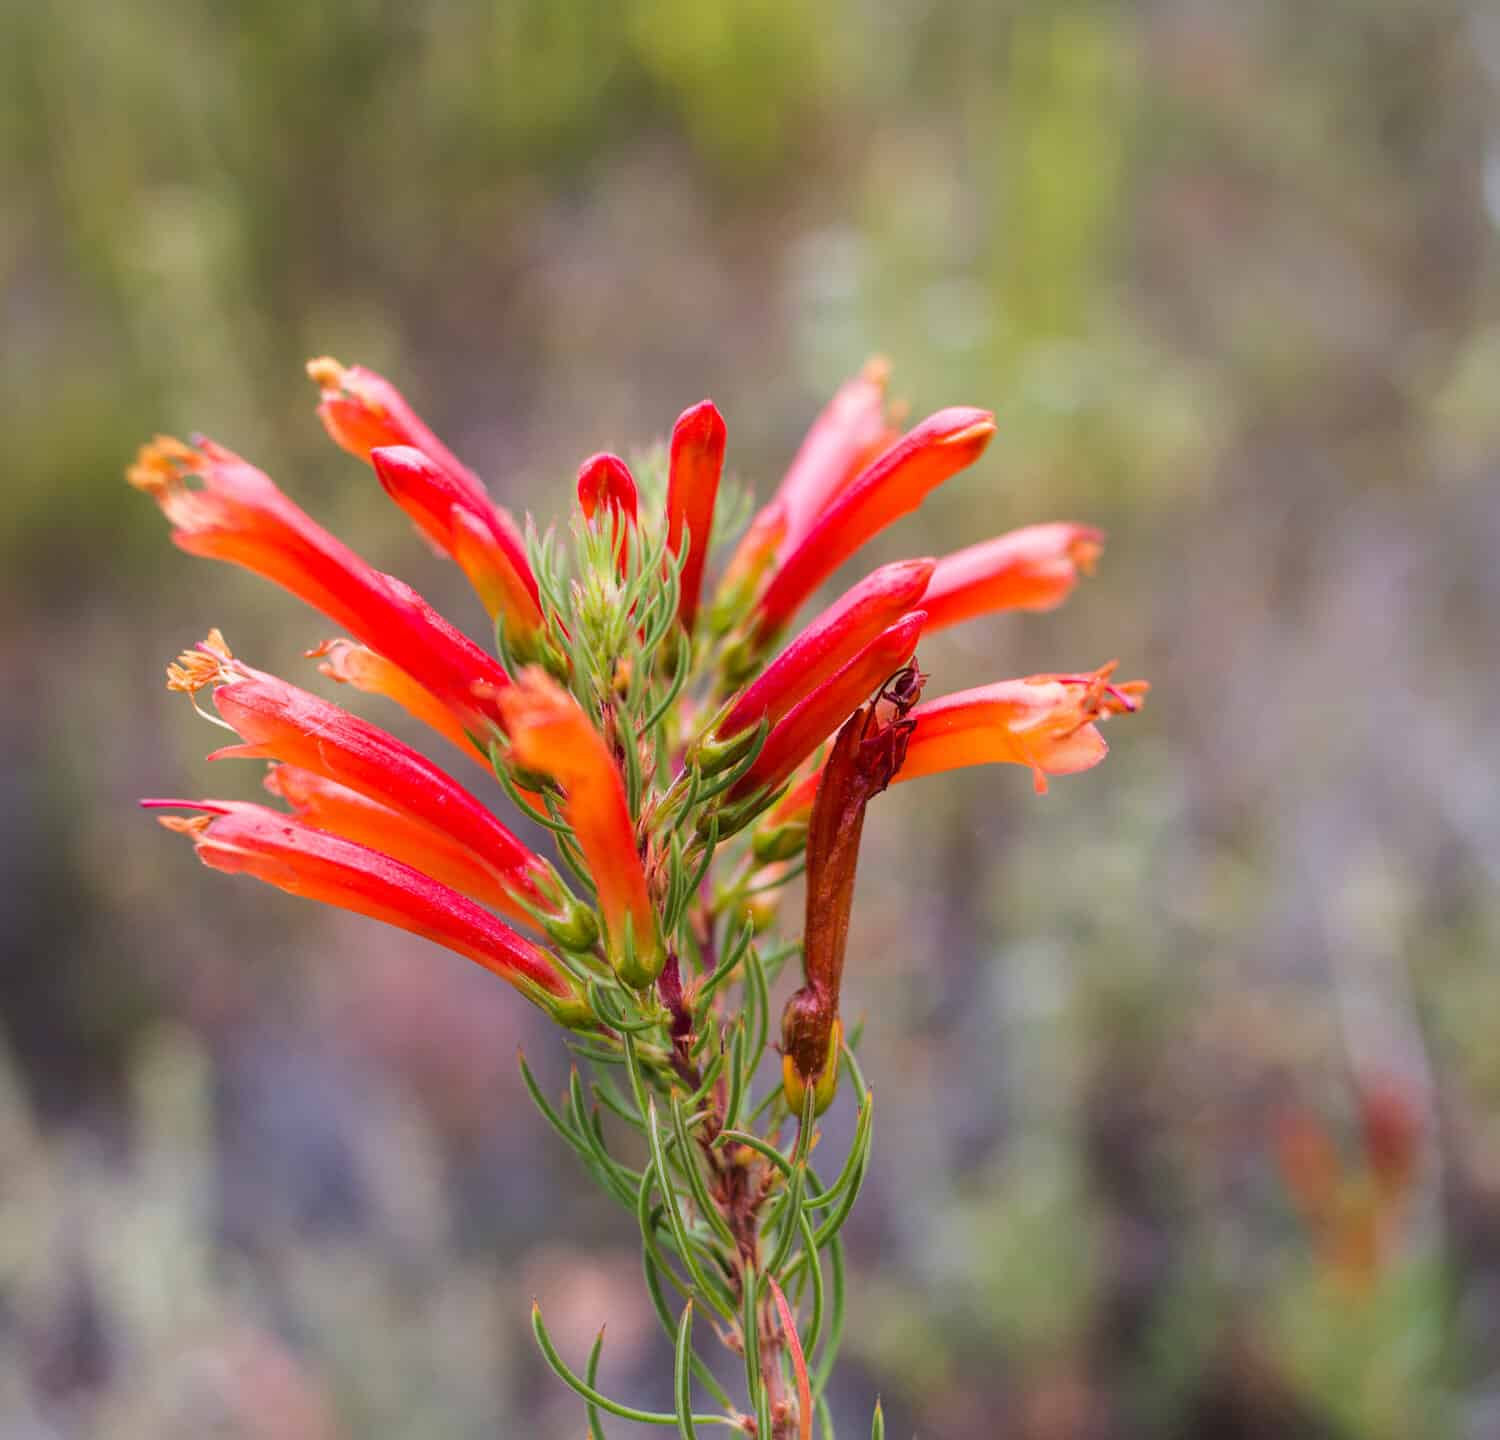 Erica flower closeup of bright color fynbos flower(Erica grandiflora)